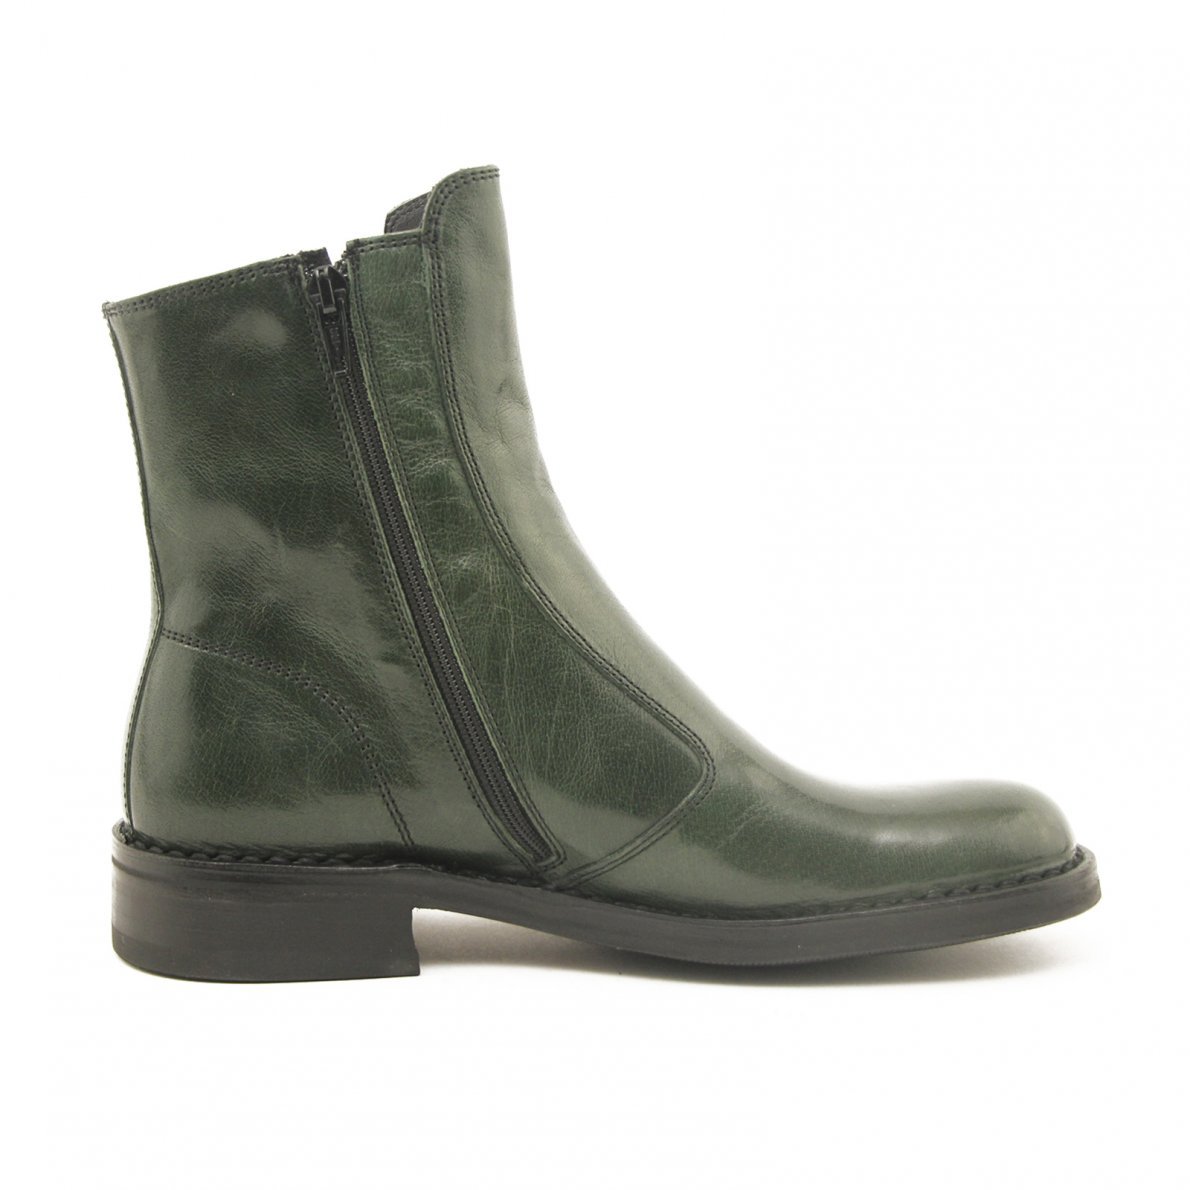 støvle, grøn Bubetti - sko